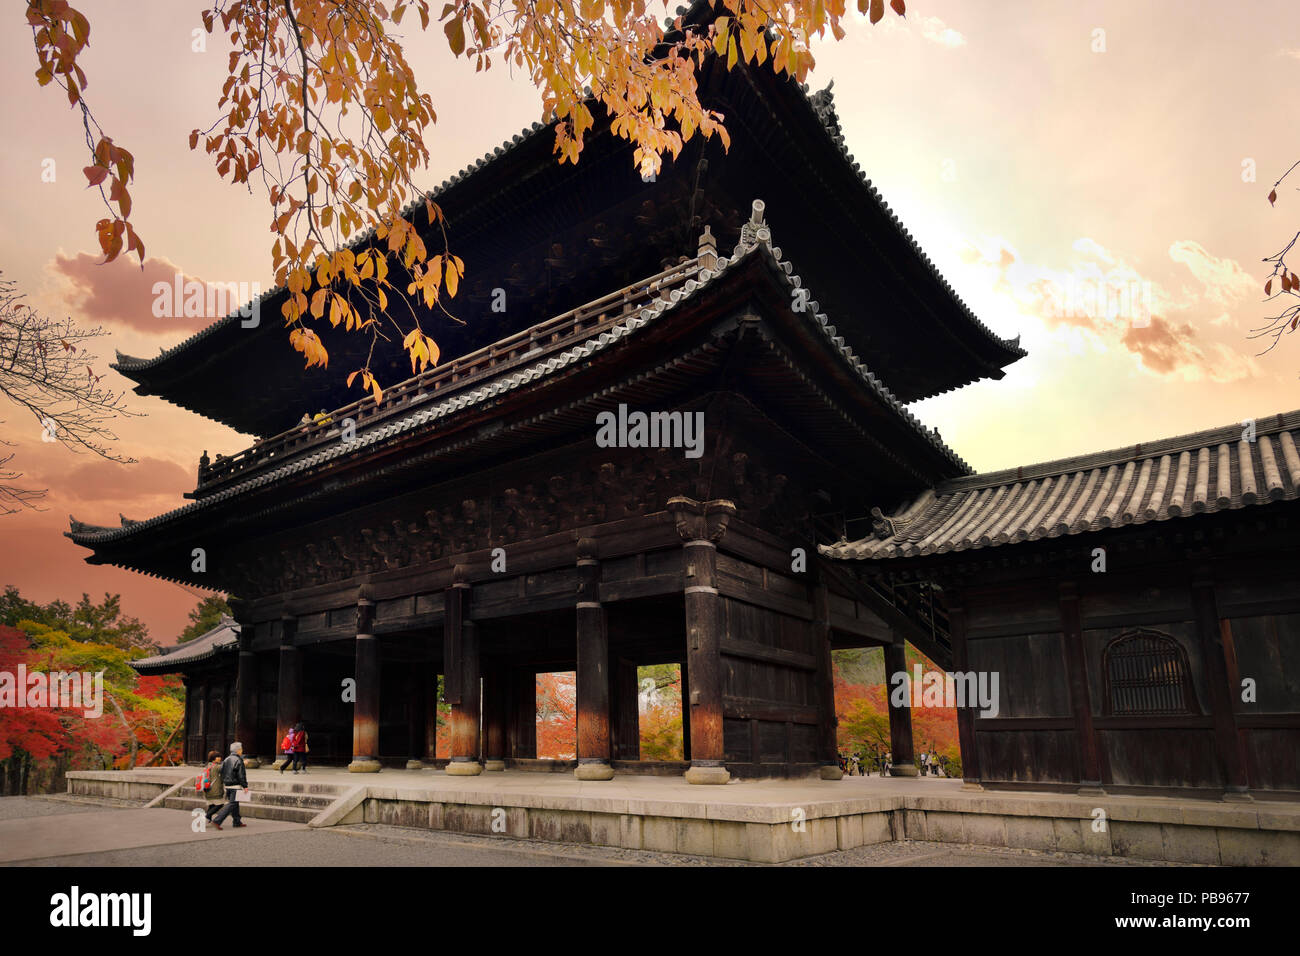 License and prints at MaximImages.com - The Sanmon, San-mon, the main gate of Nanzen-ji historic Zen Buddhist temple in Sakyo-ku, Kyoto, Japan Stock Photo